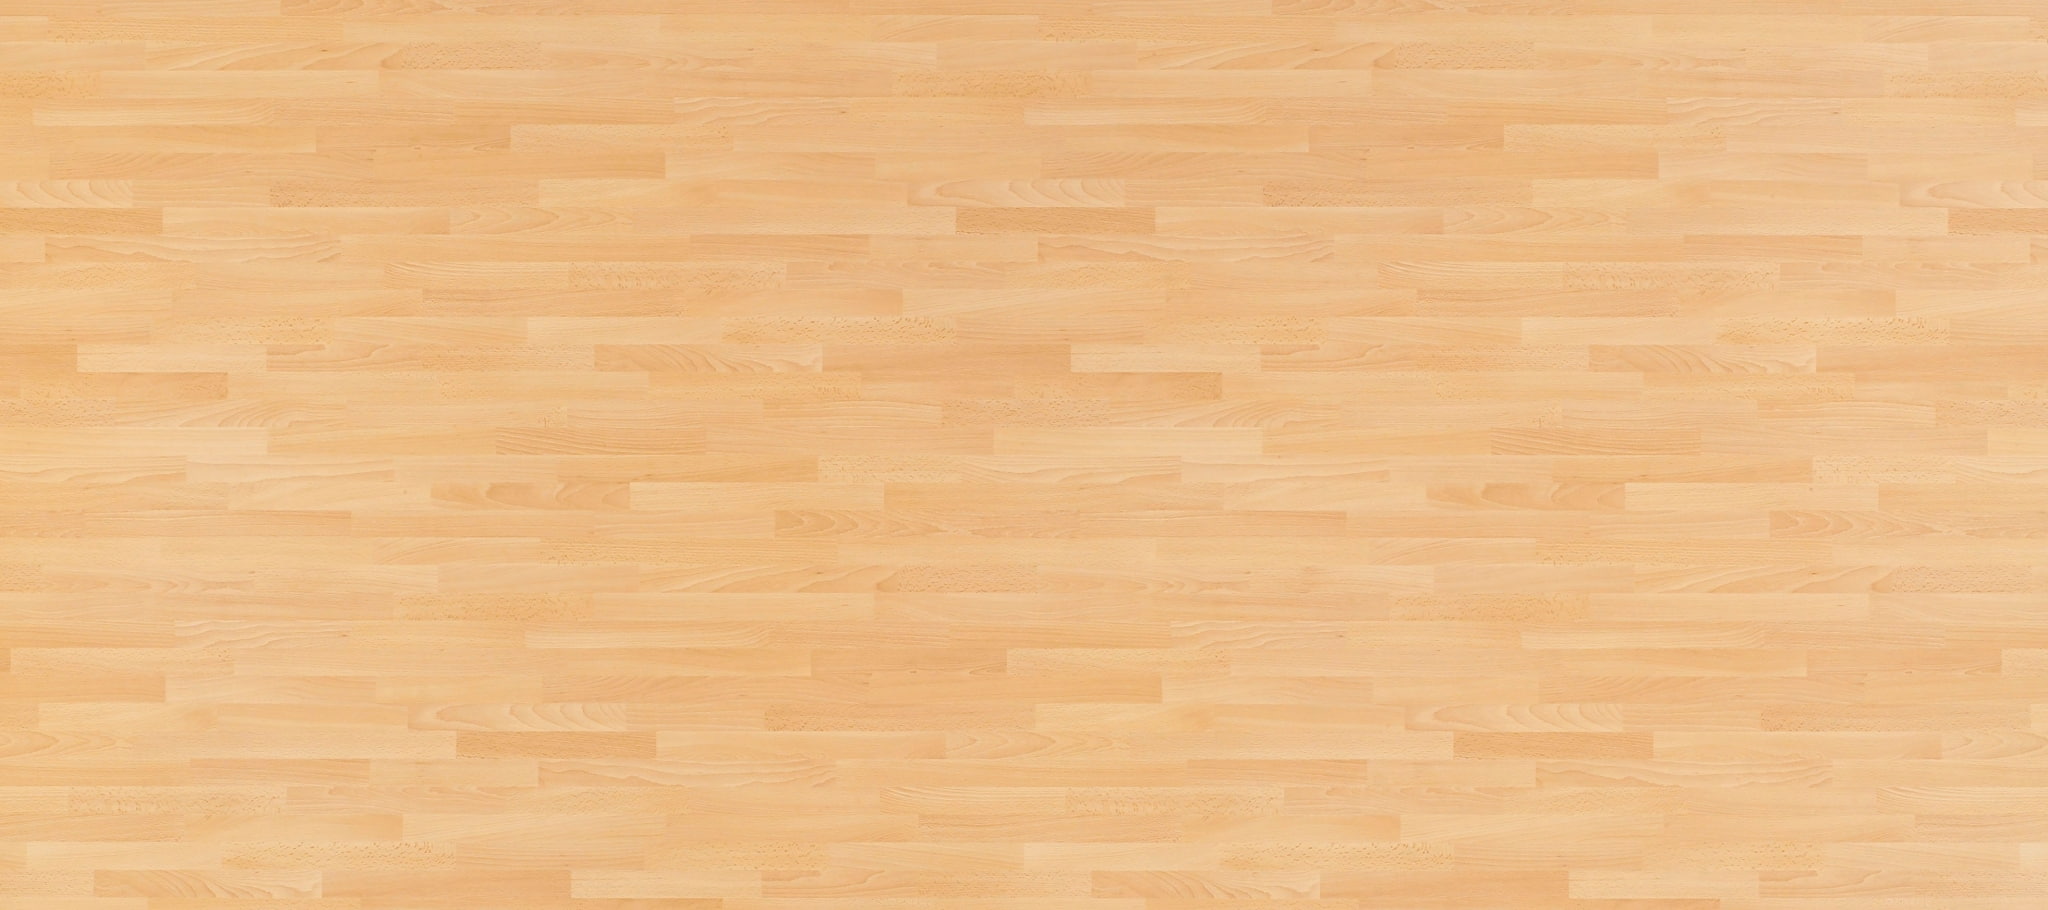 wood hd widescreen  for laptop, backgrounds, full frame, hardwood floor